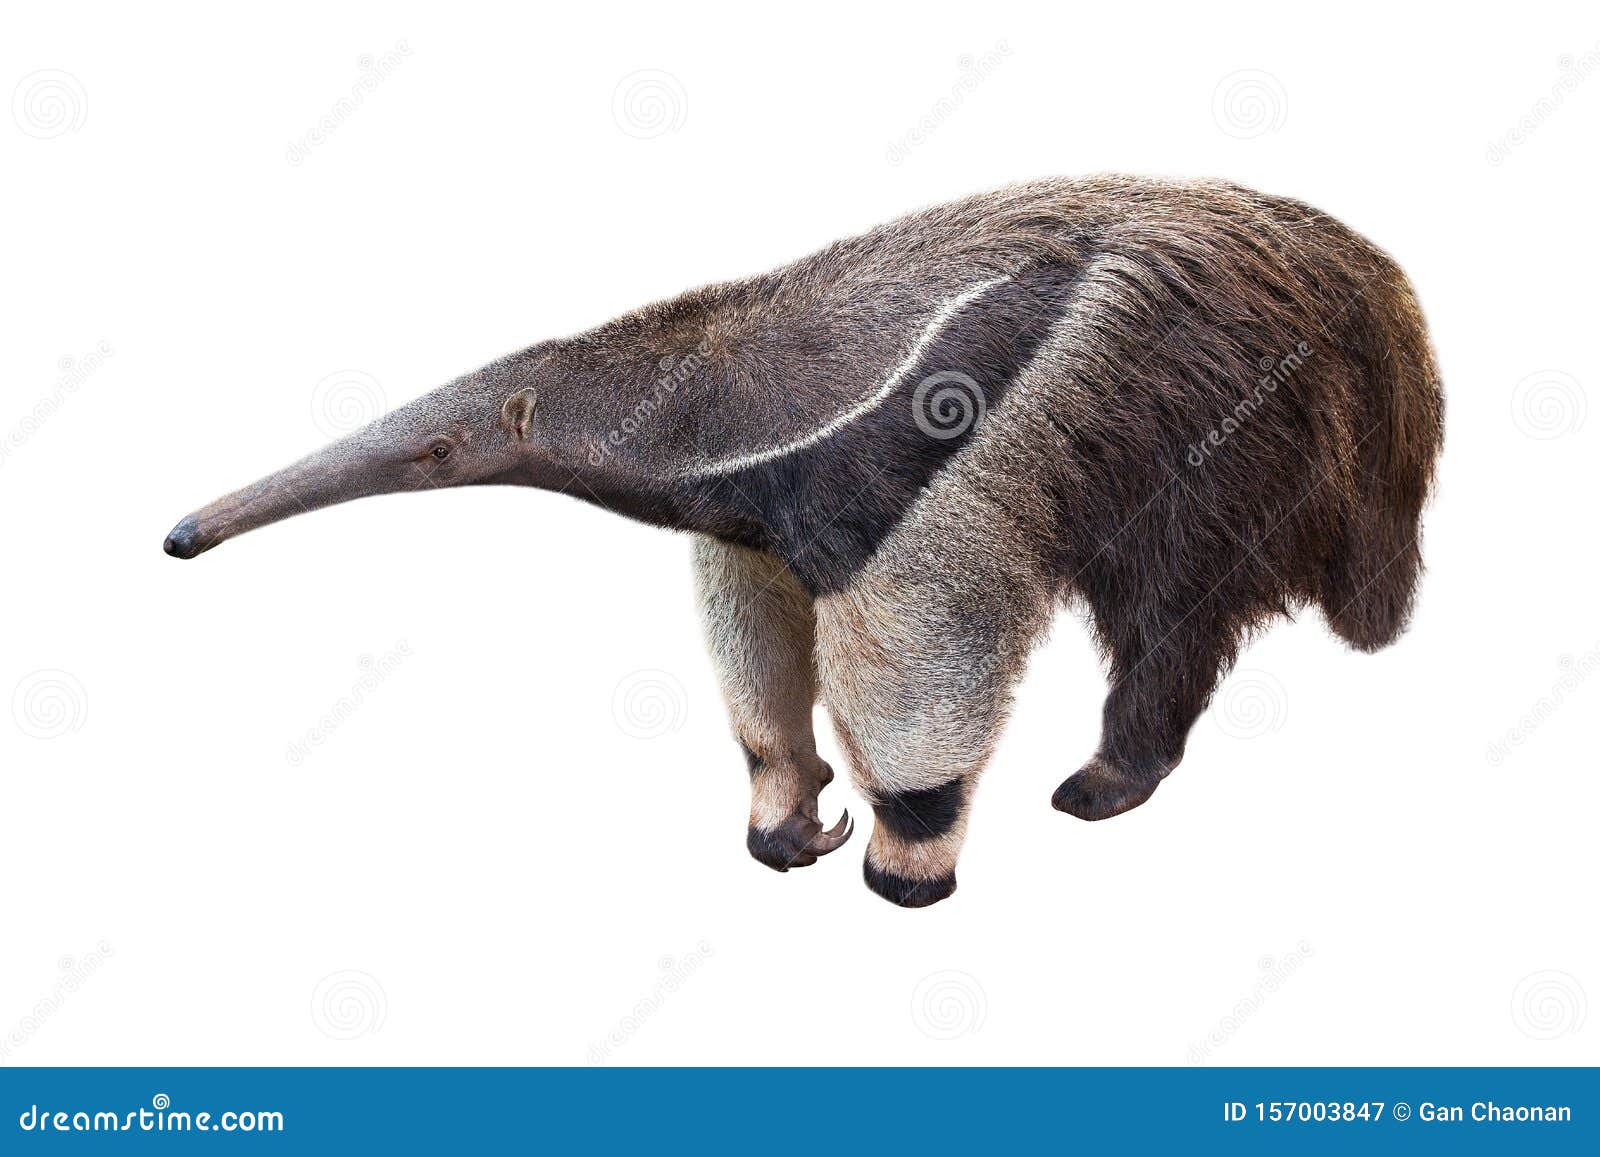 Giant Anteater Isolated on White Background Stock Image - Image of mammal,  nose: 157003847